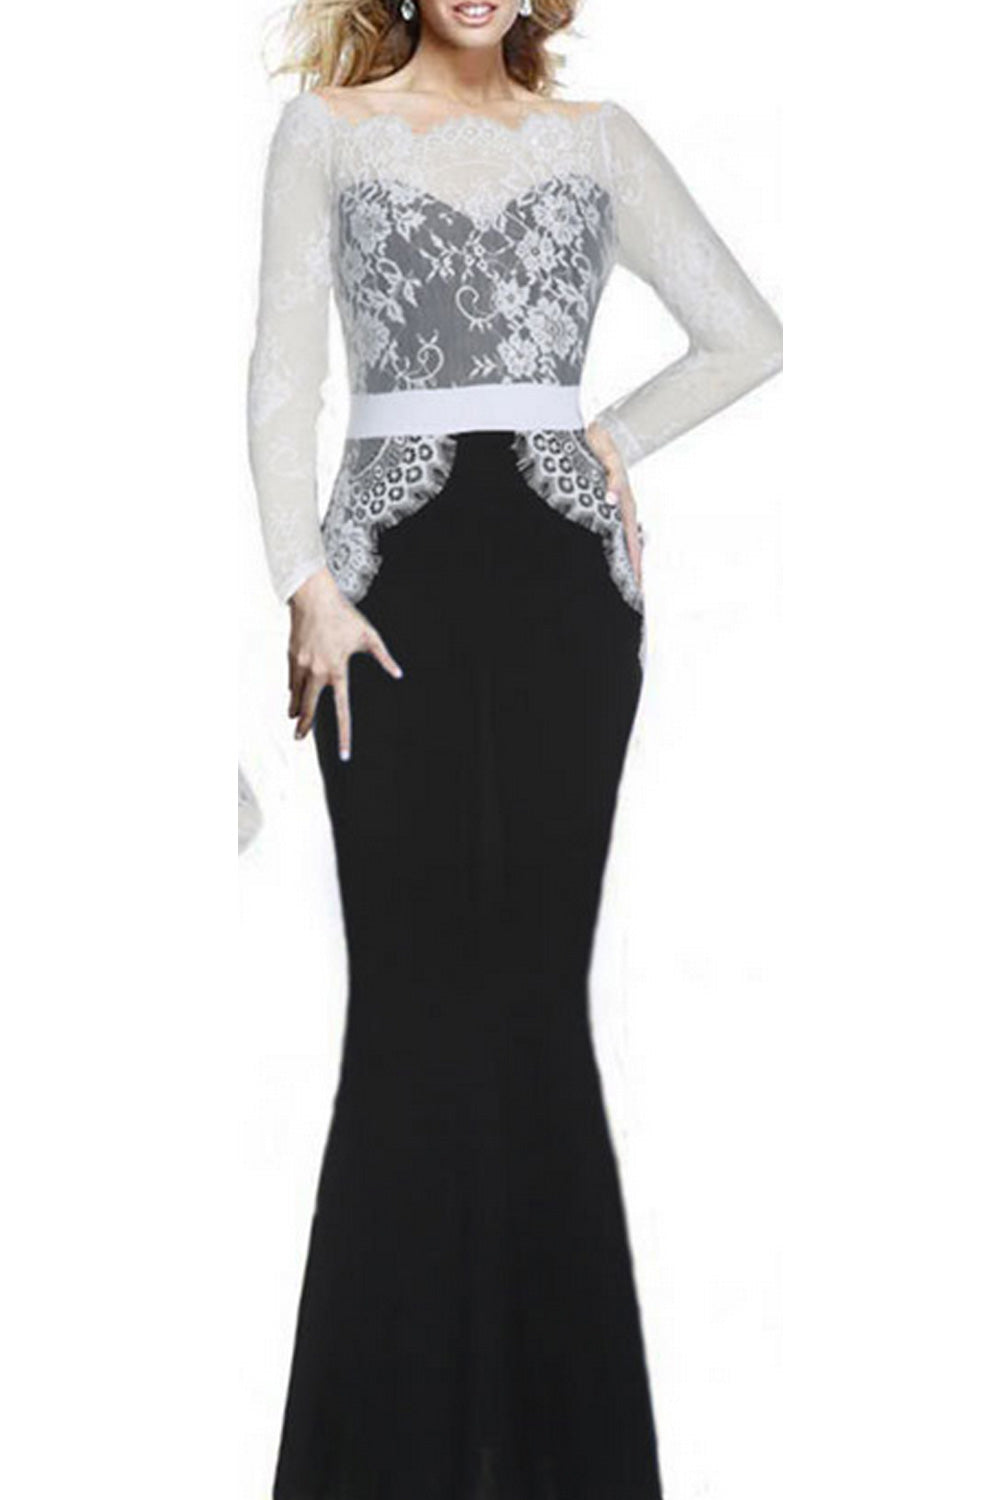 Ketty More Women's Big Swing Lace Design Fishtail Skirt Style Long Dress-KMWD118